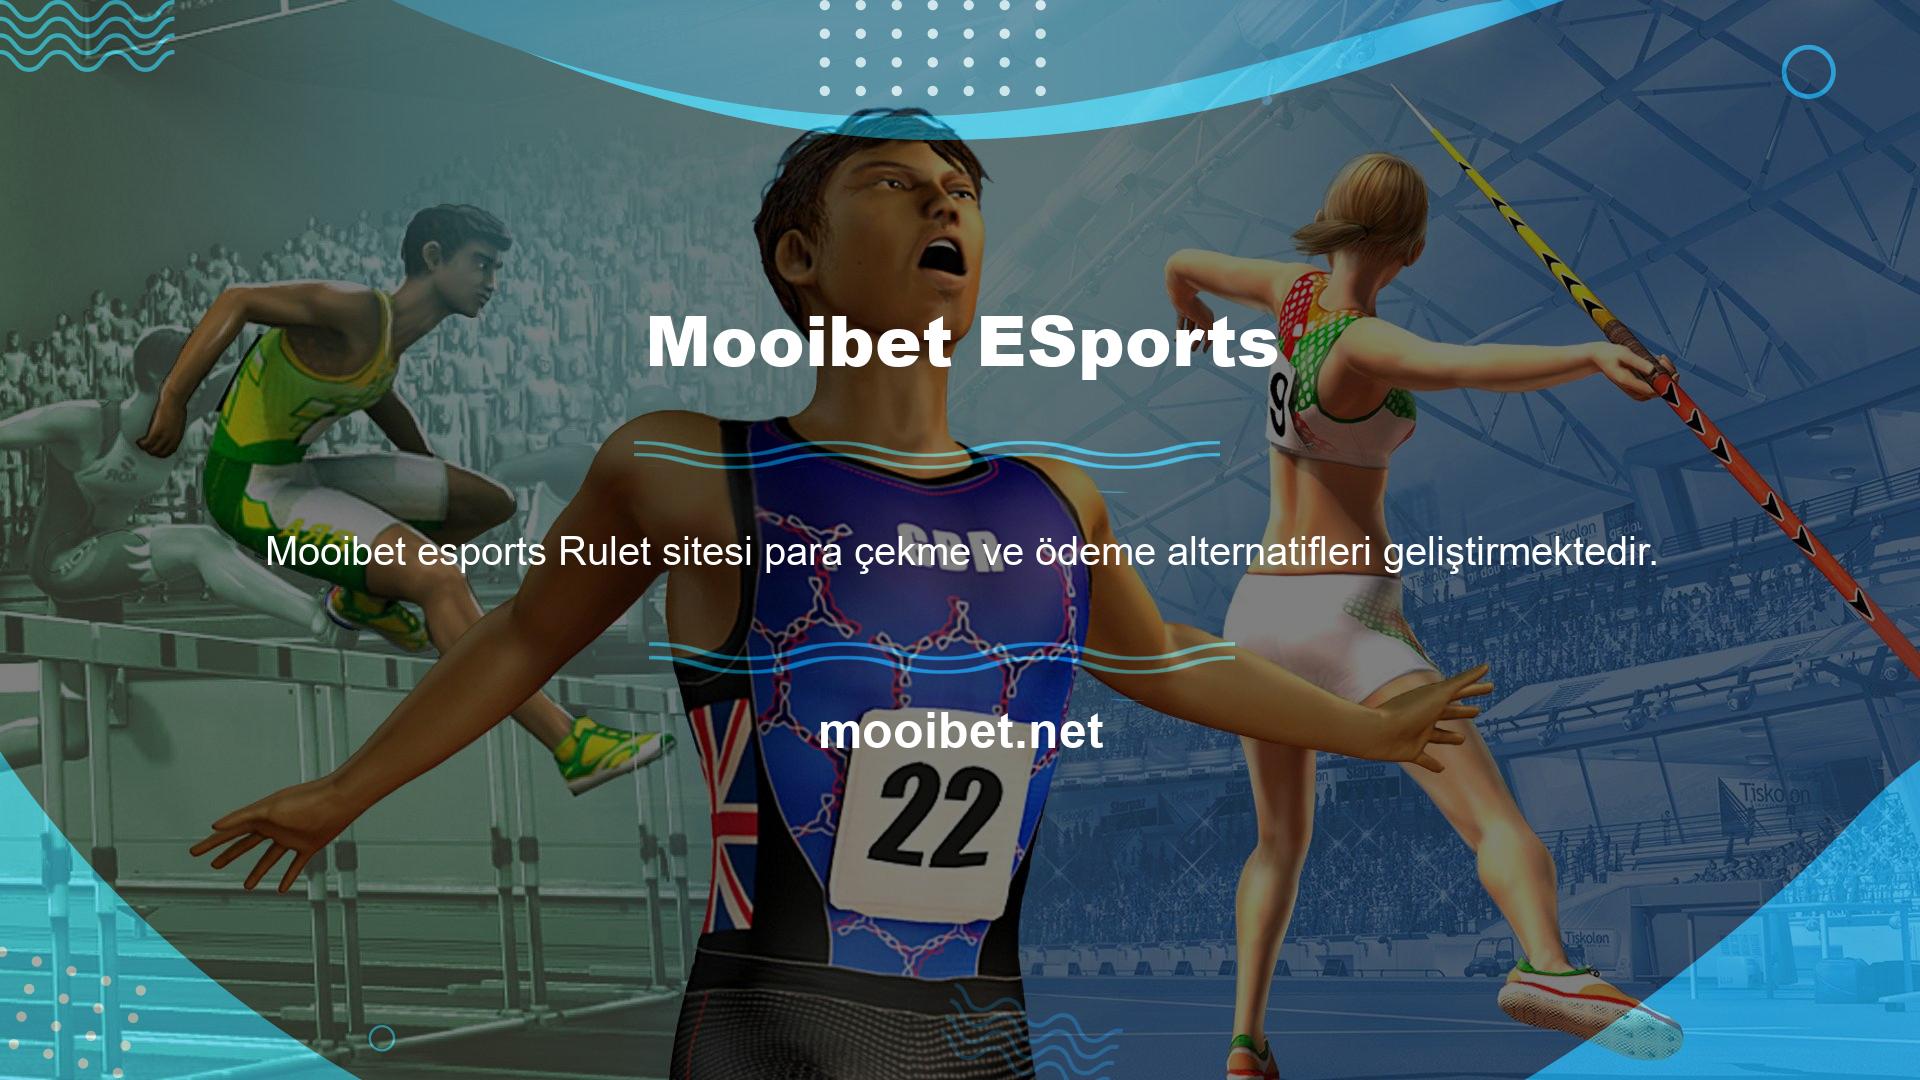 Mooibet ESports